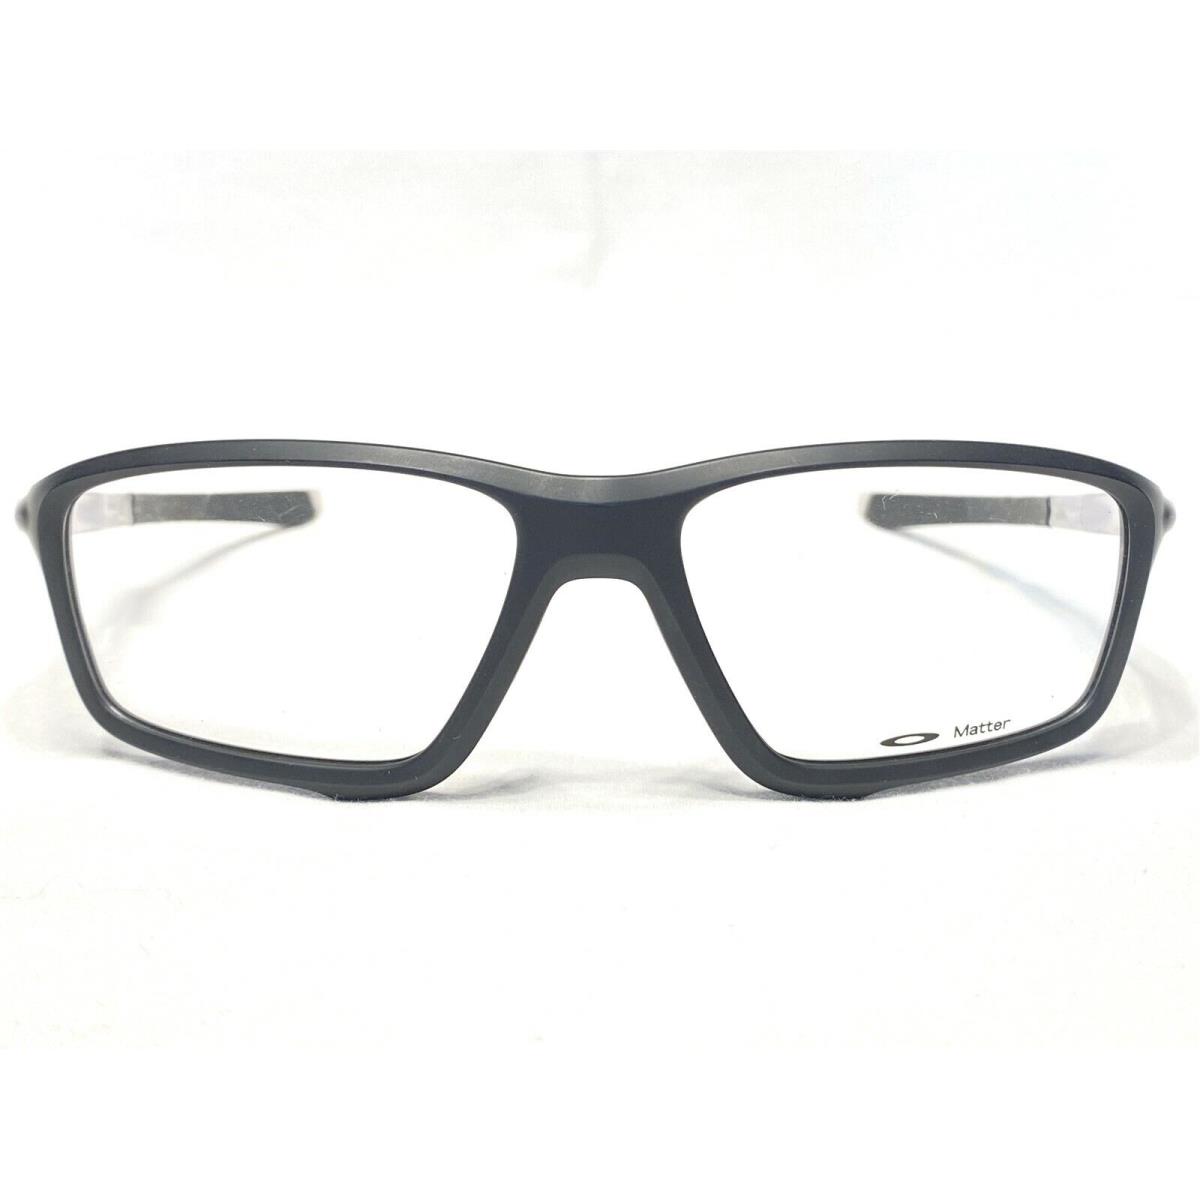 Oakley eyeglasses Crosslink Zero - Matte Black & Frost , Matte Black Frame, 0358 Manufacturer 0